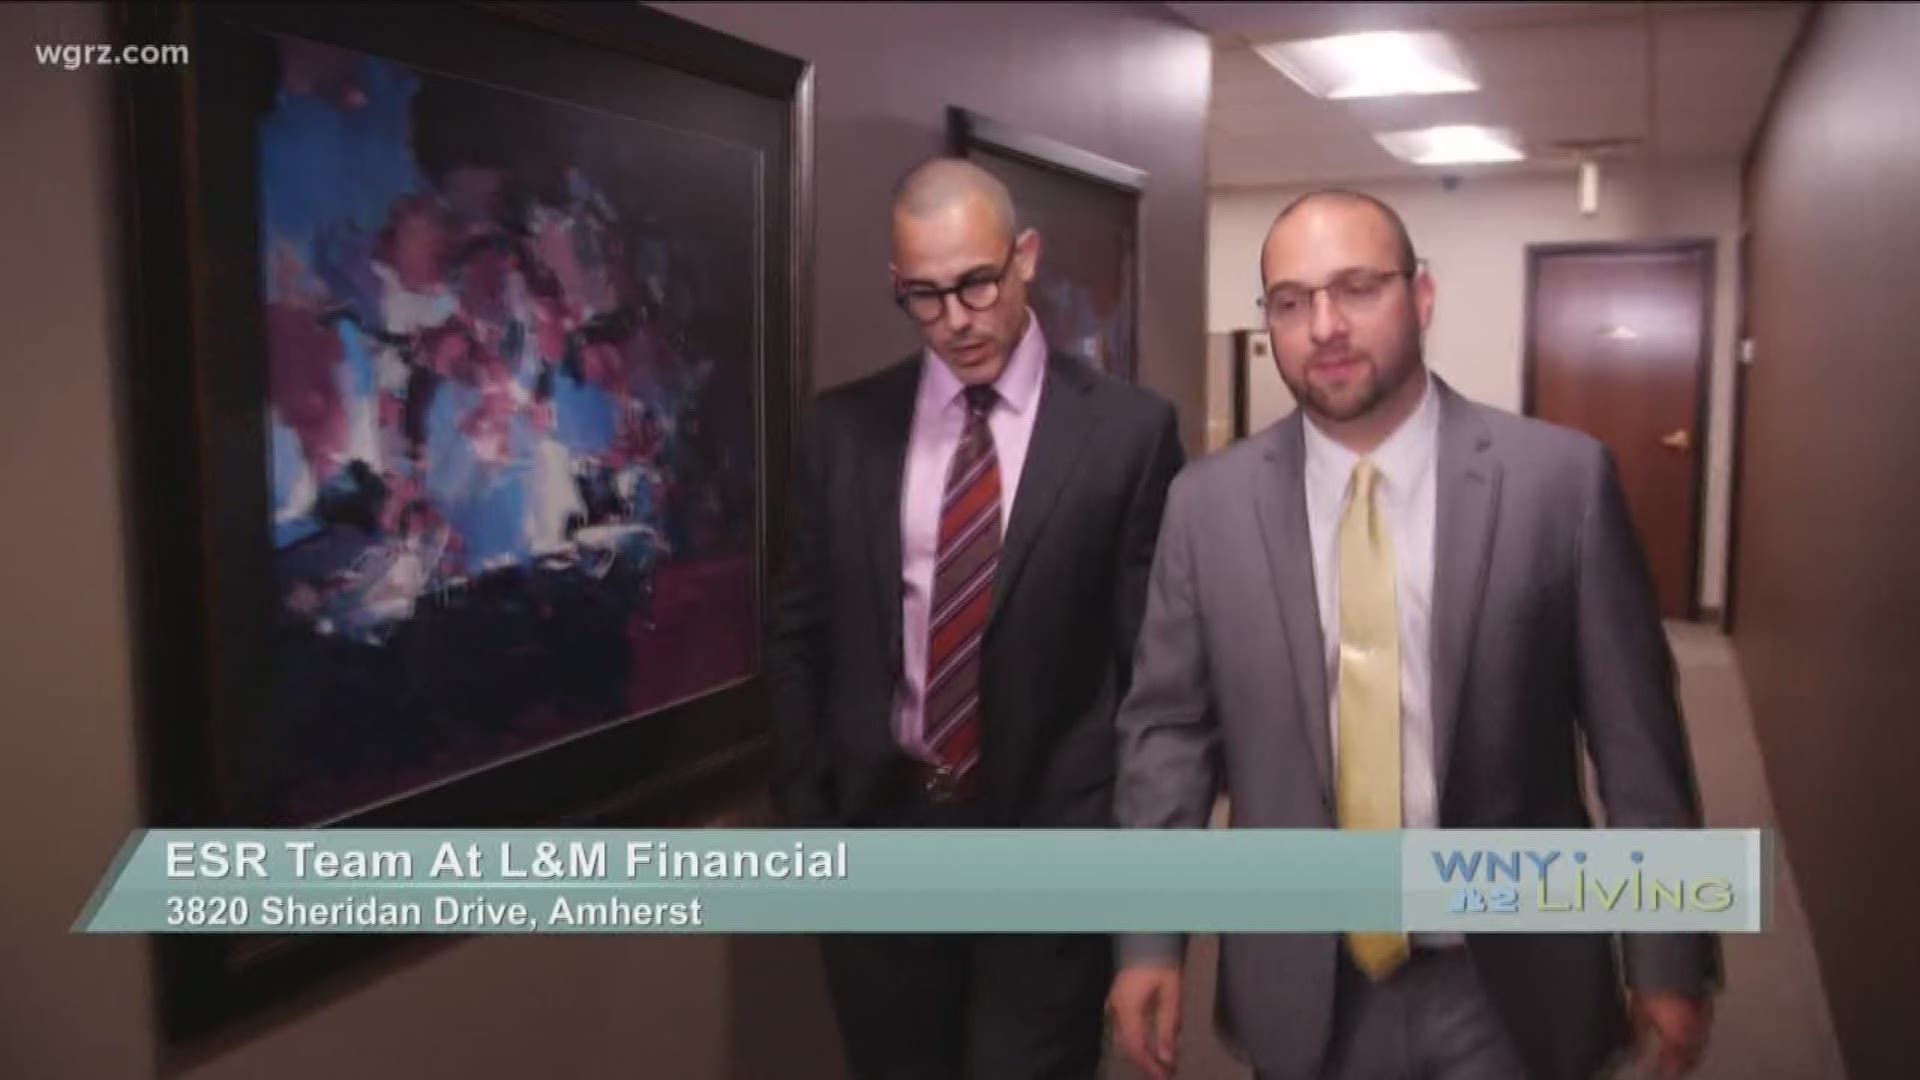 WNY Living - July 28 - The ESR Team At L&M Financial